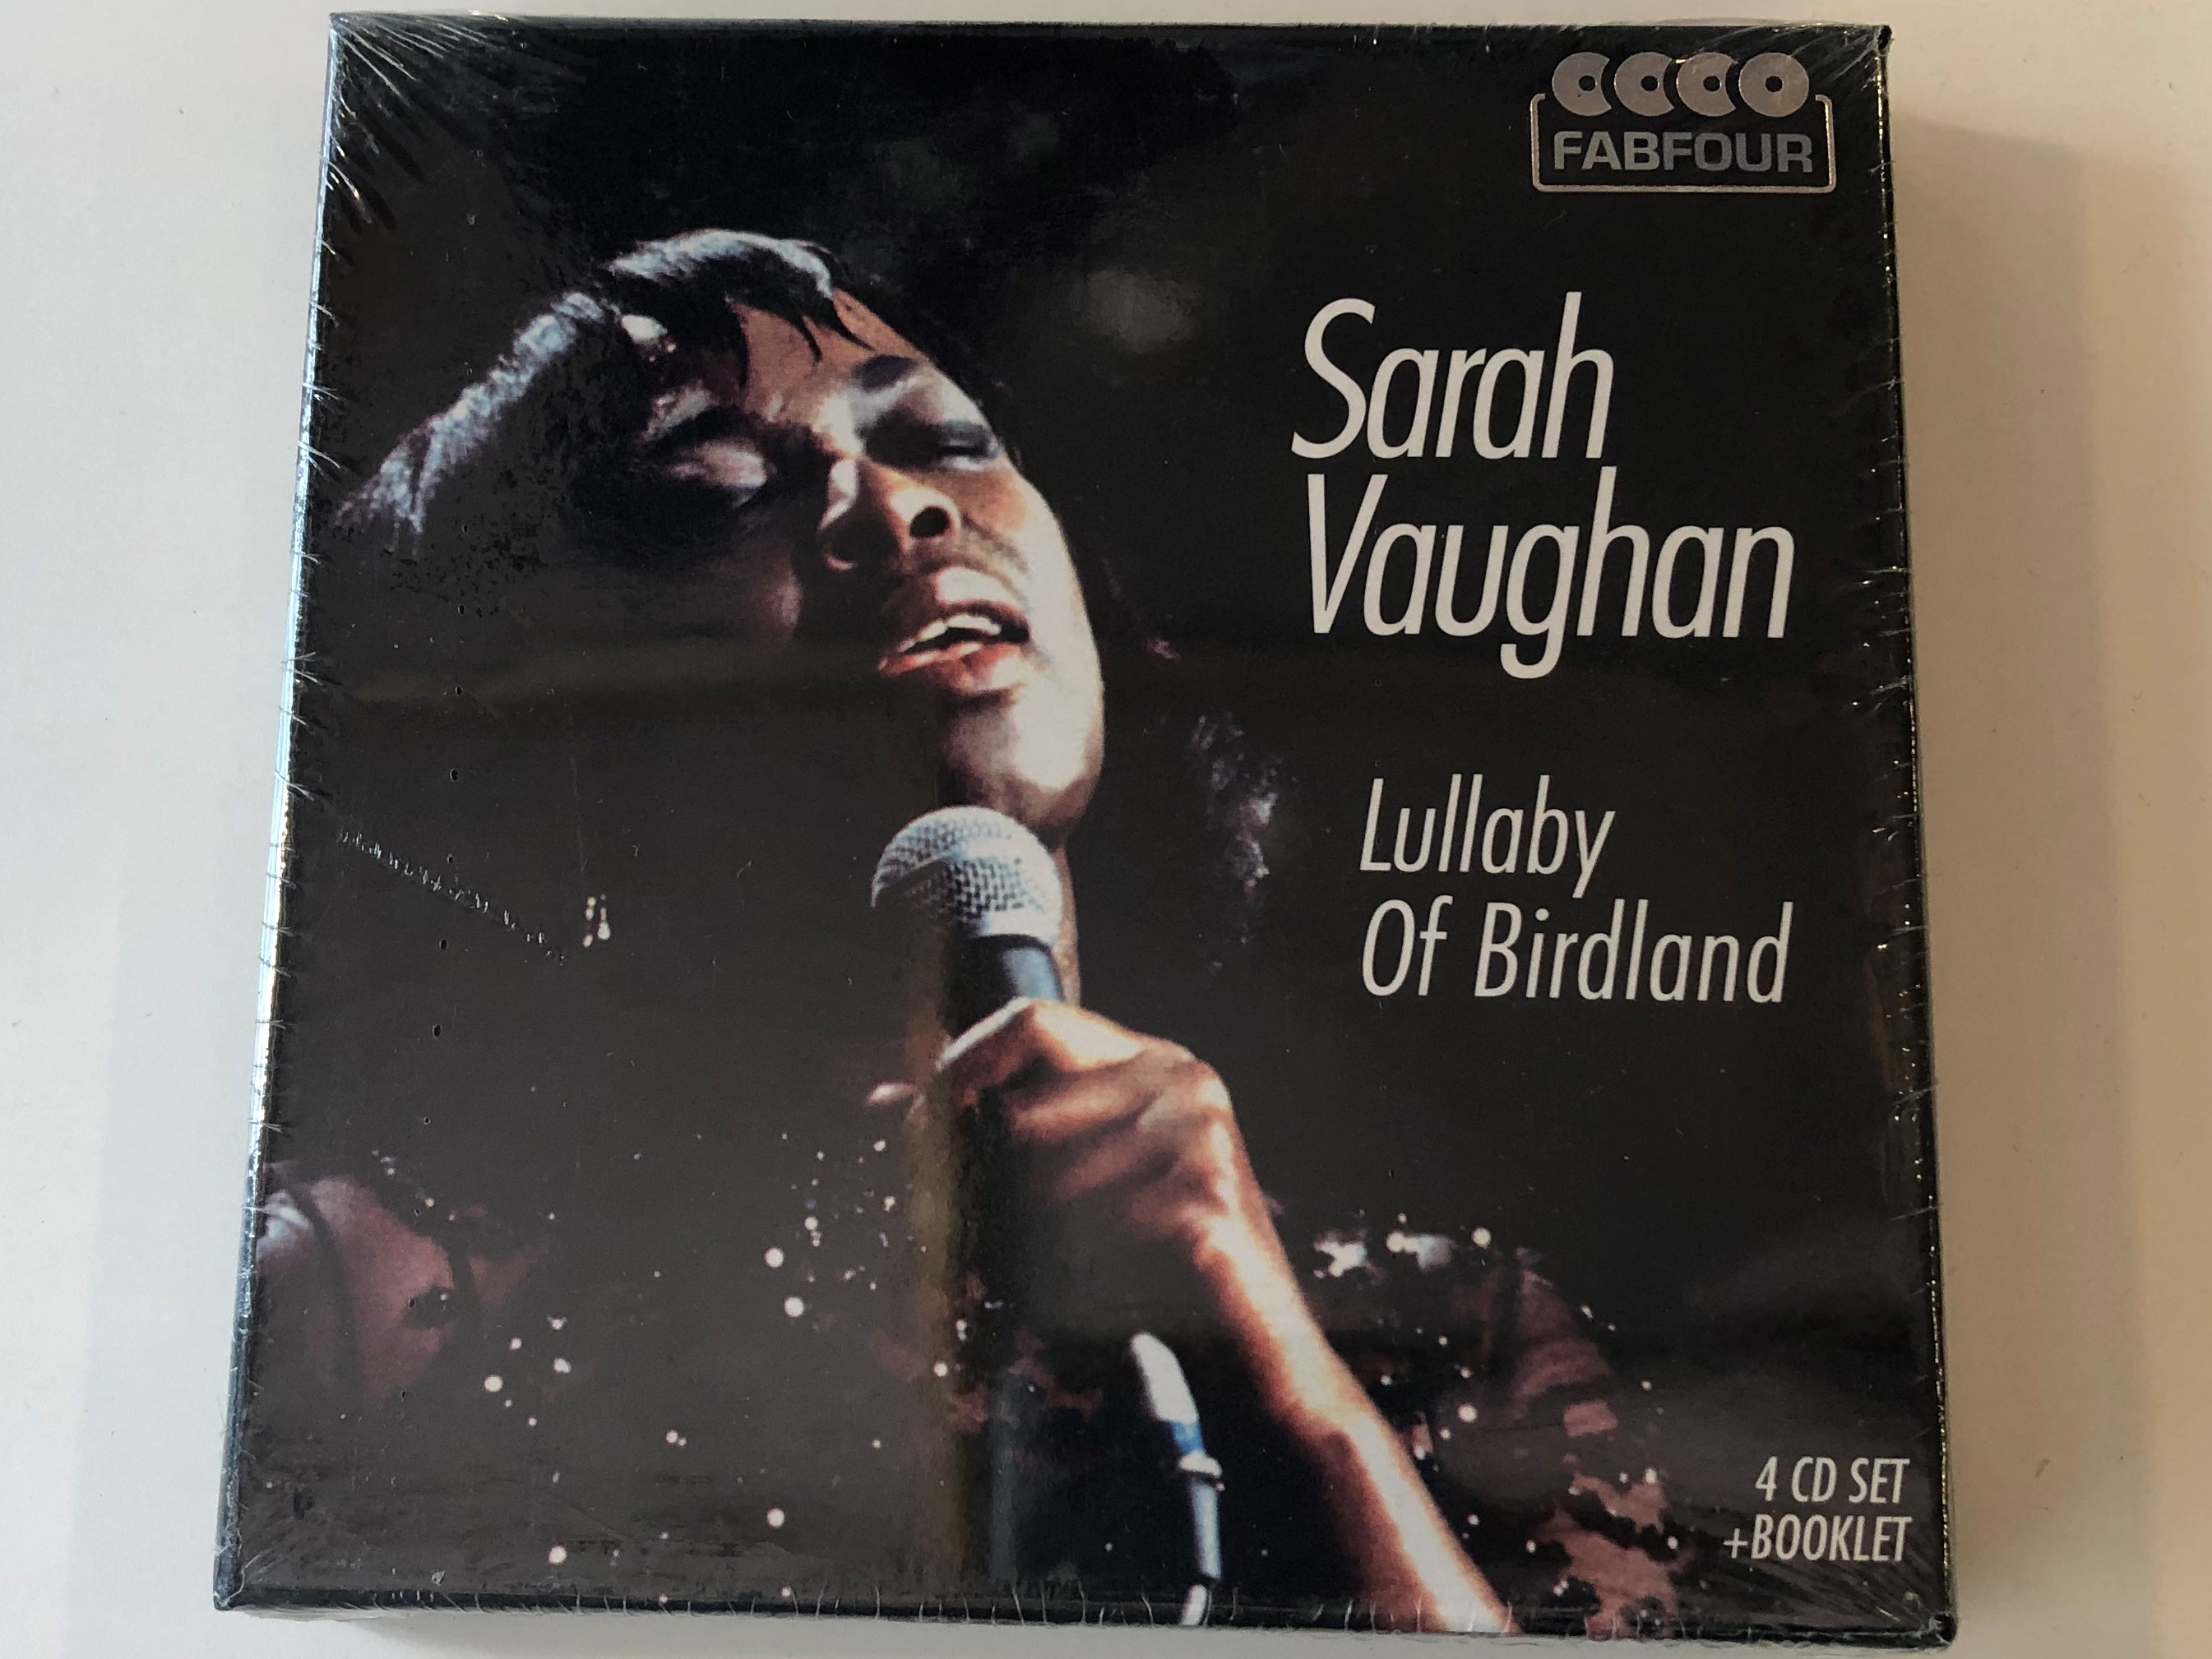 sarah-vaughan-lullaby-of-birdland-membran-4x-audio-cd-stereo-box-set-booklet-233328-1-.jpg